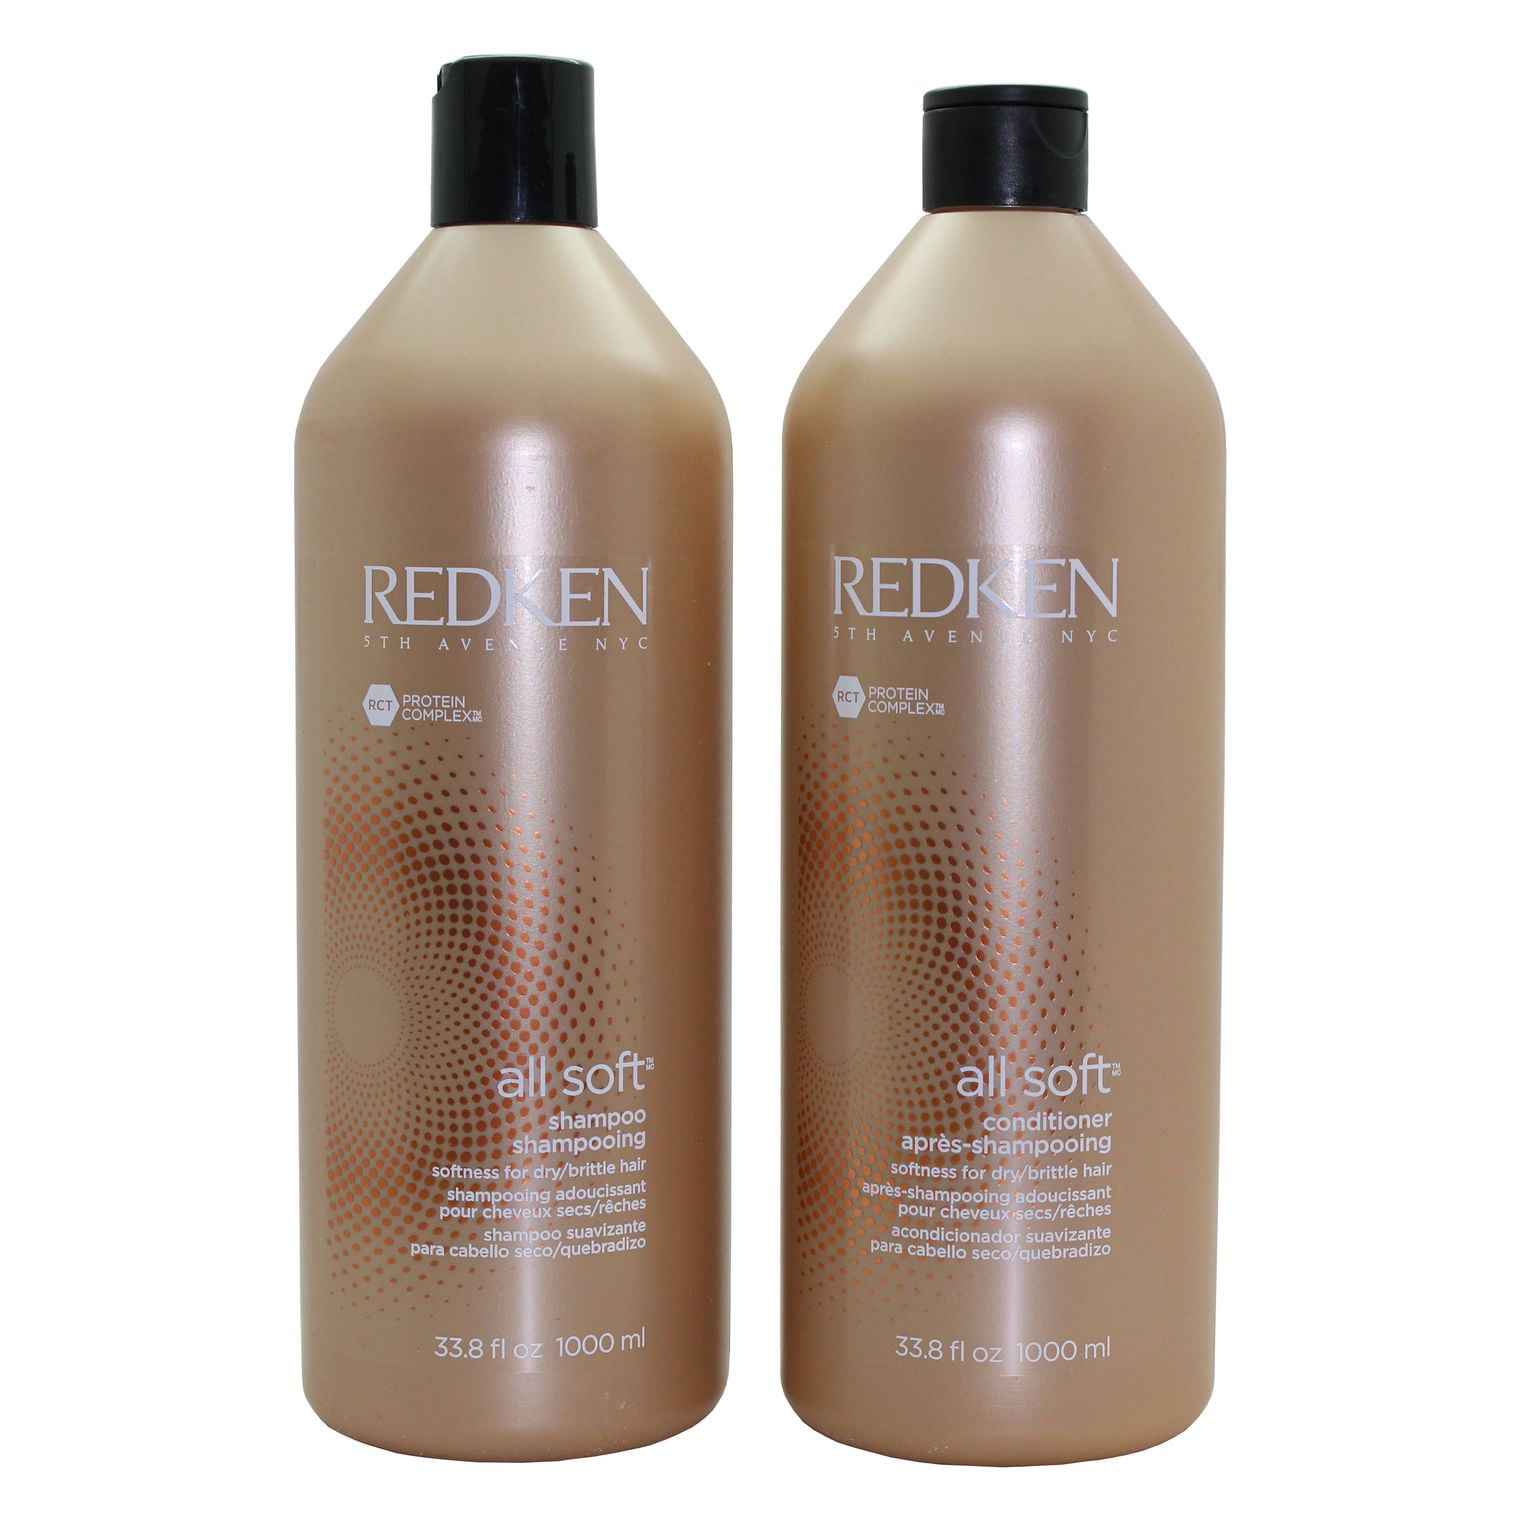 Redken shampoo and conditioner